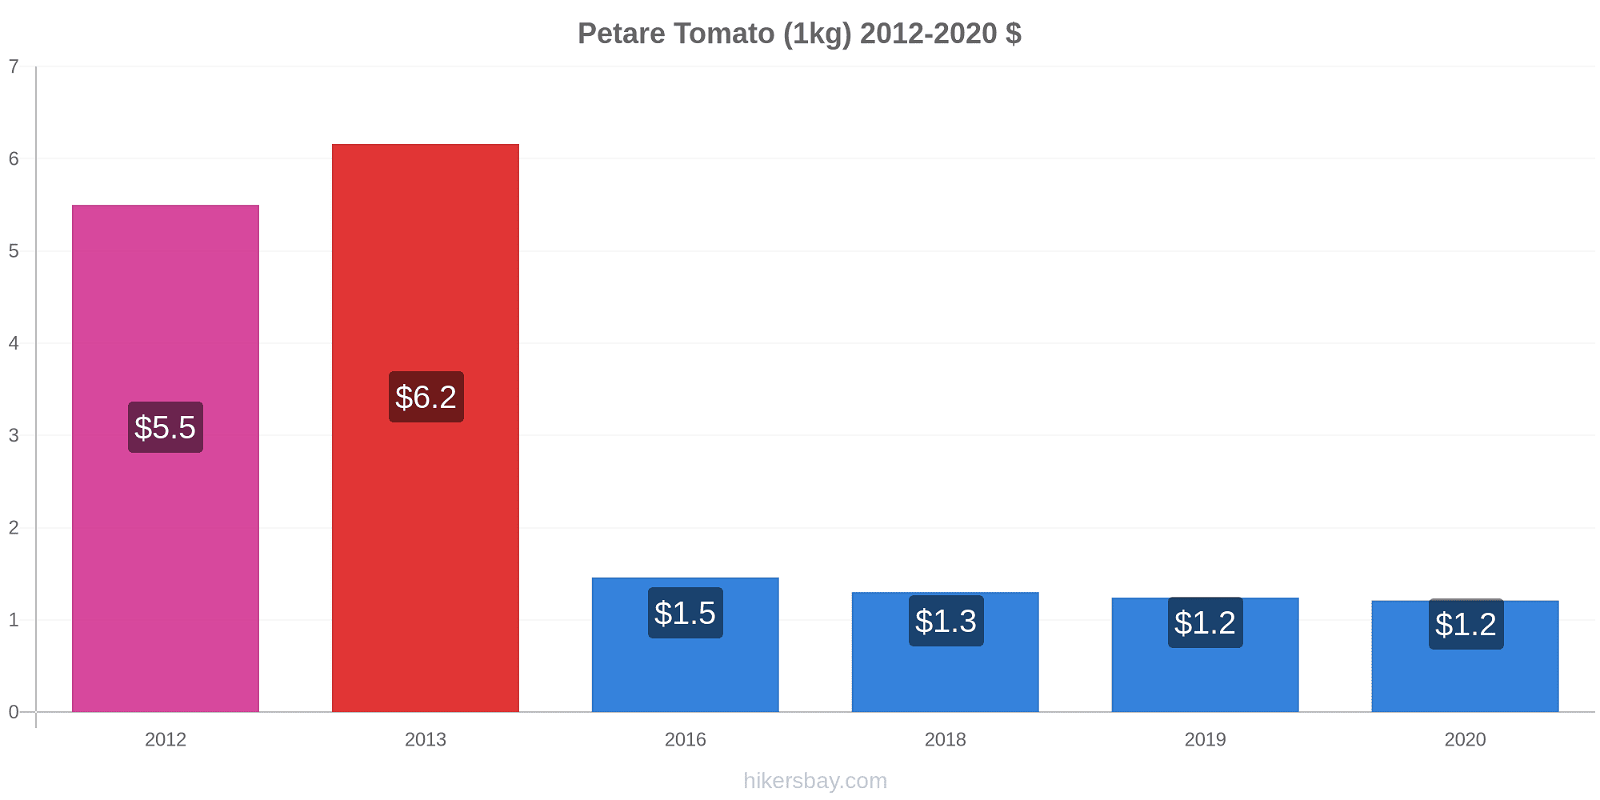 Petare price changes Tomato (1kg) hikersbay.com